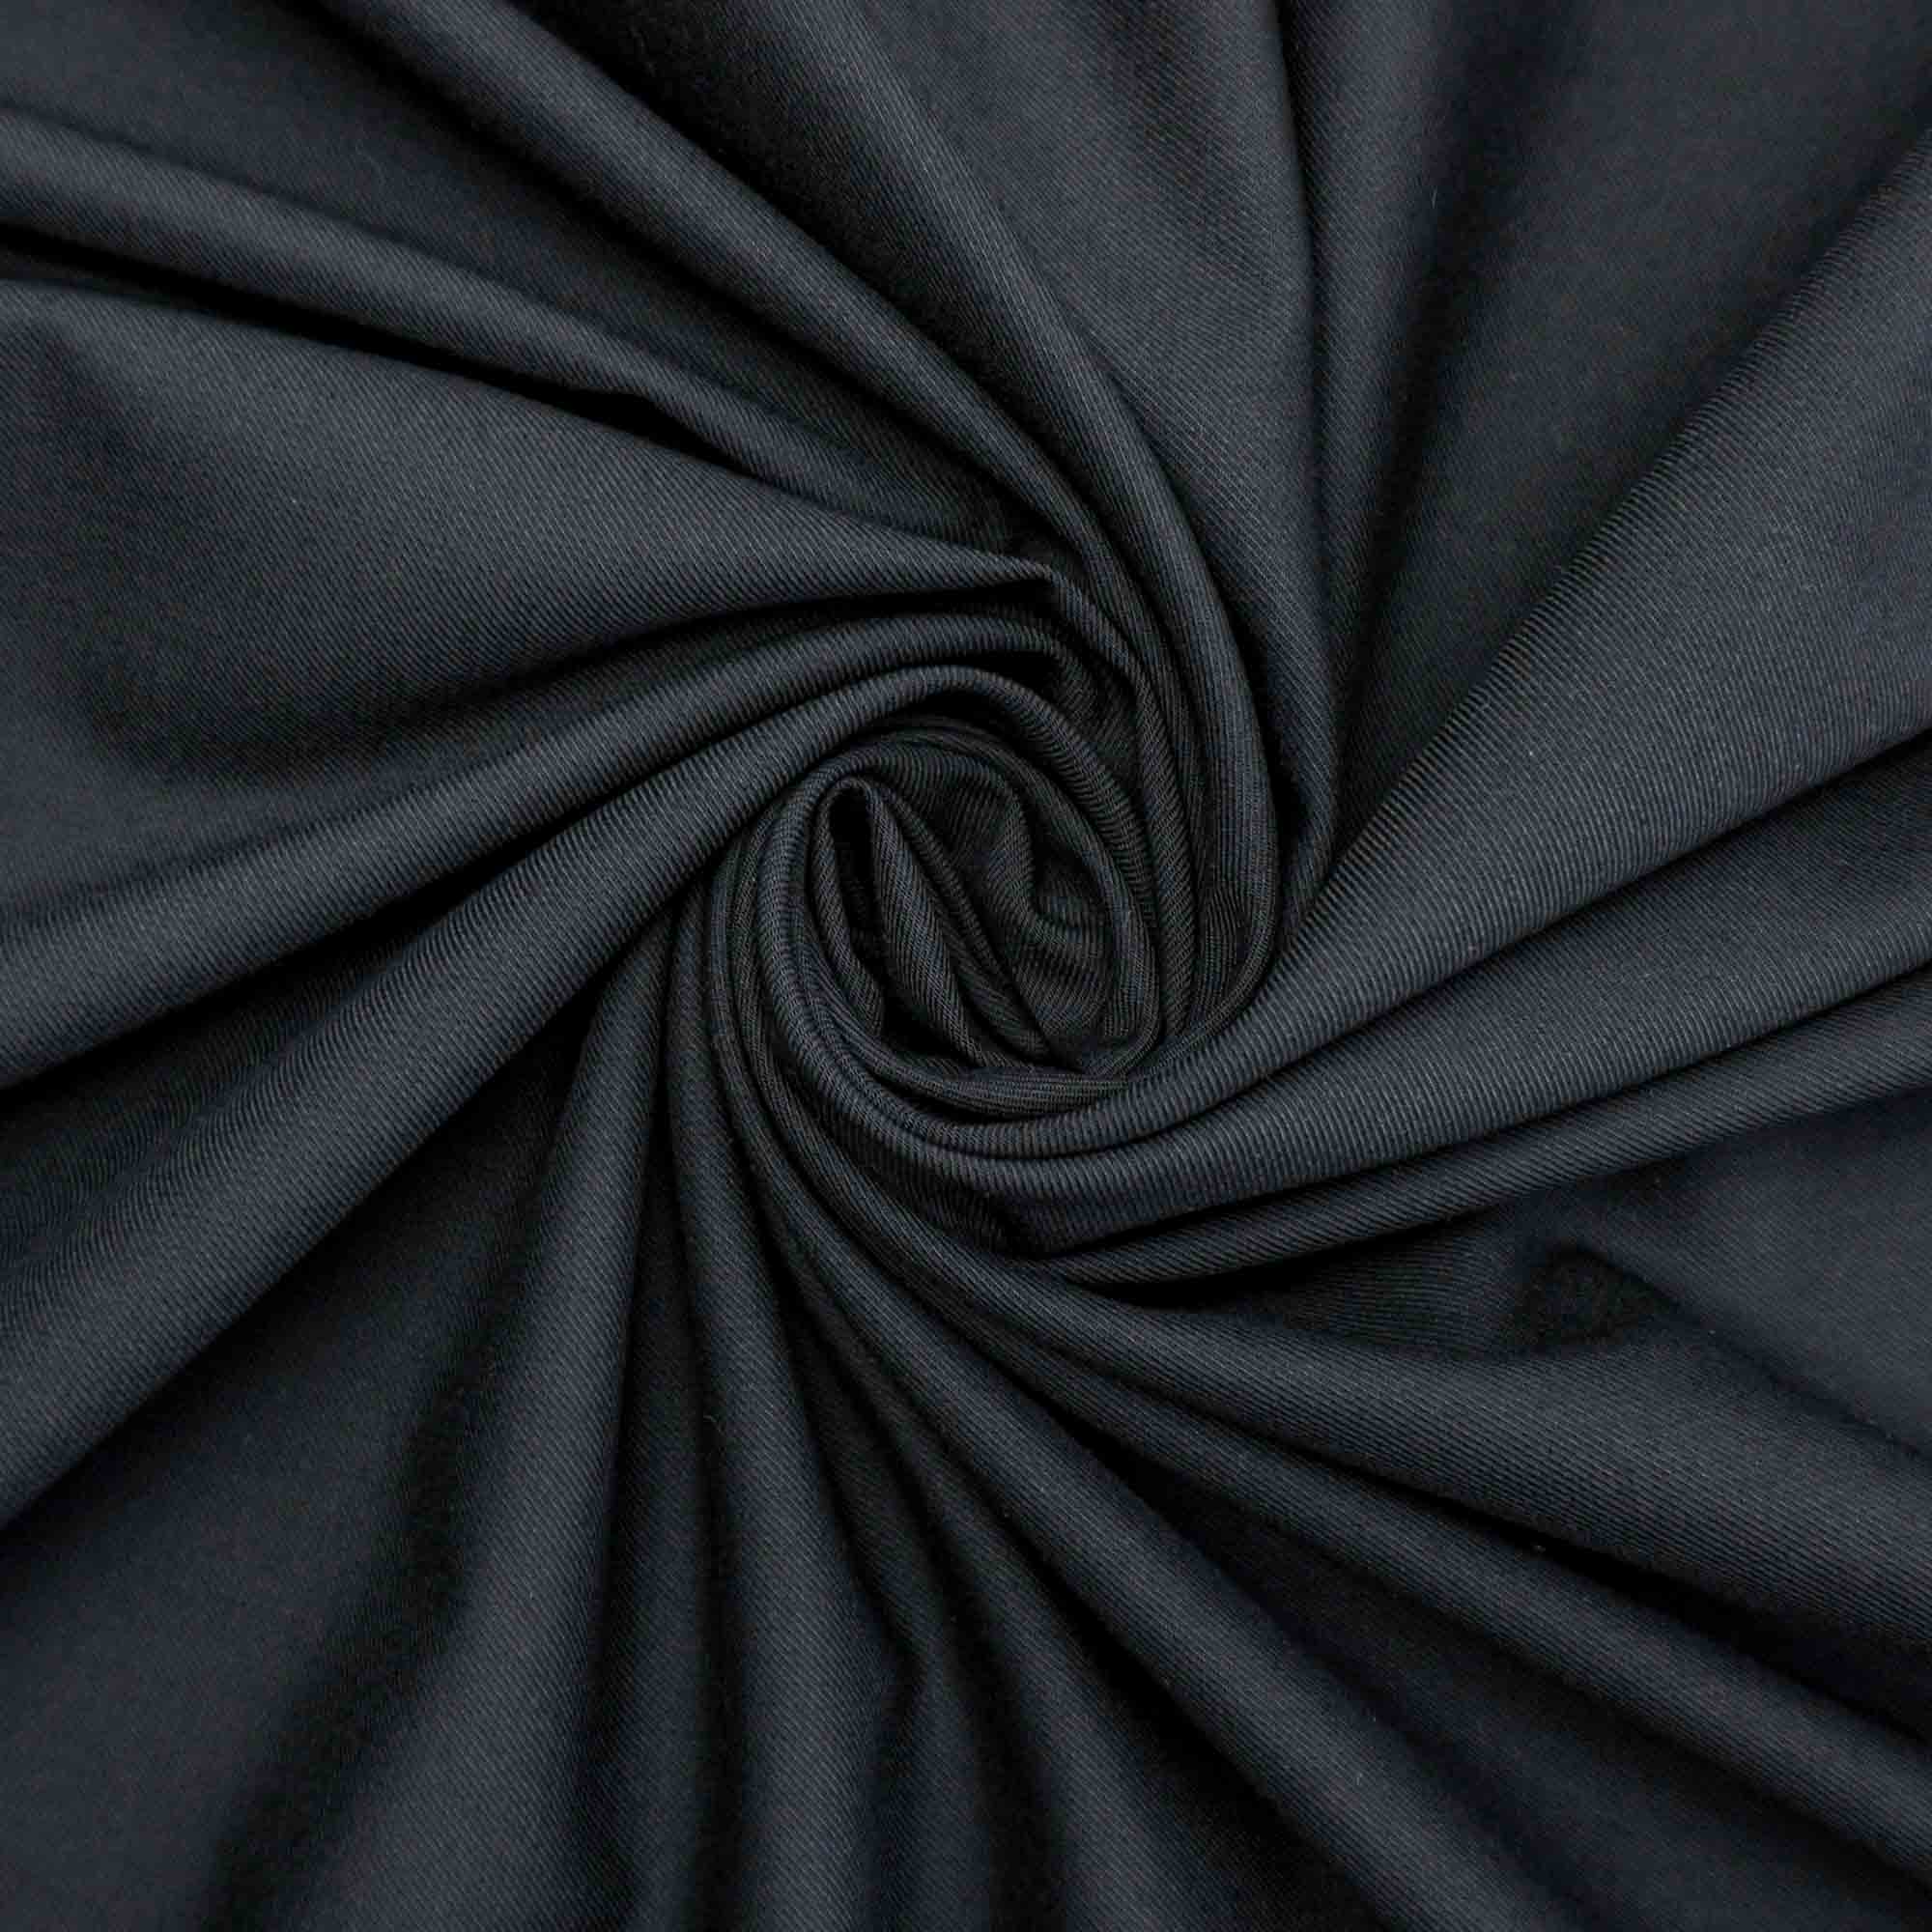 Tecido alfaiataria italiana preto (tecido italiano legítimo)